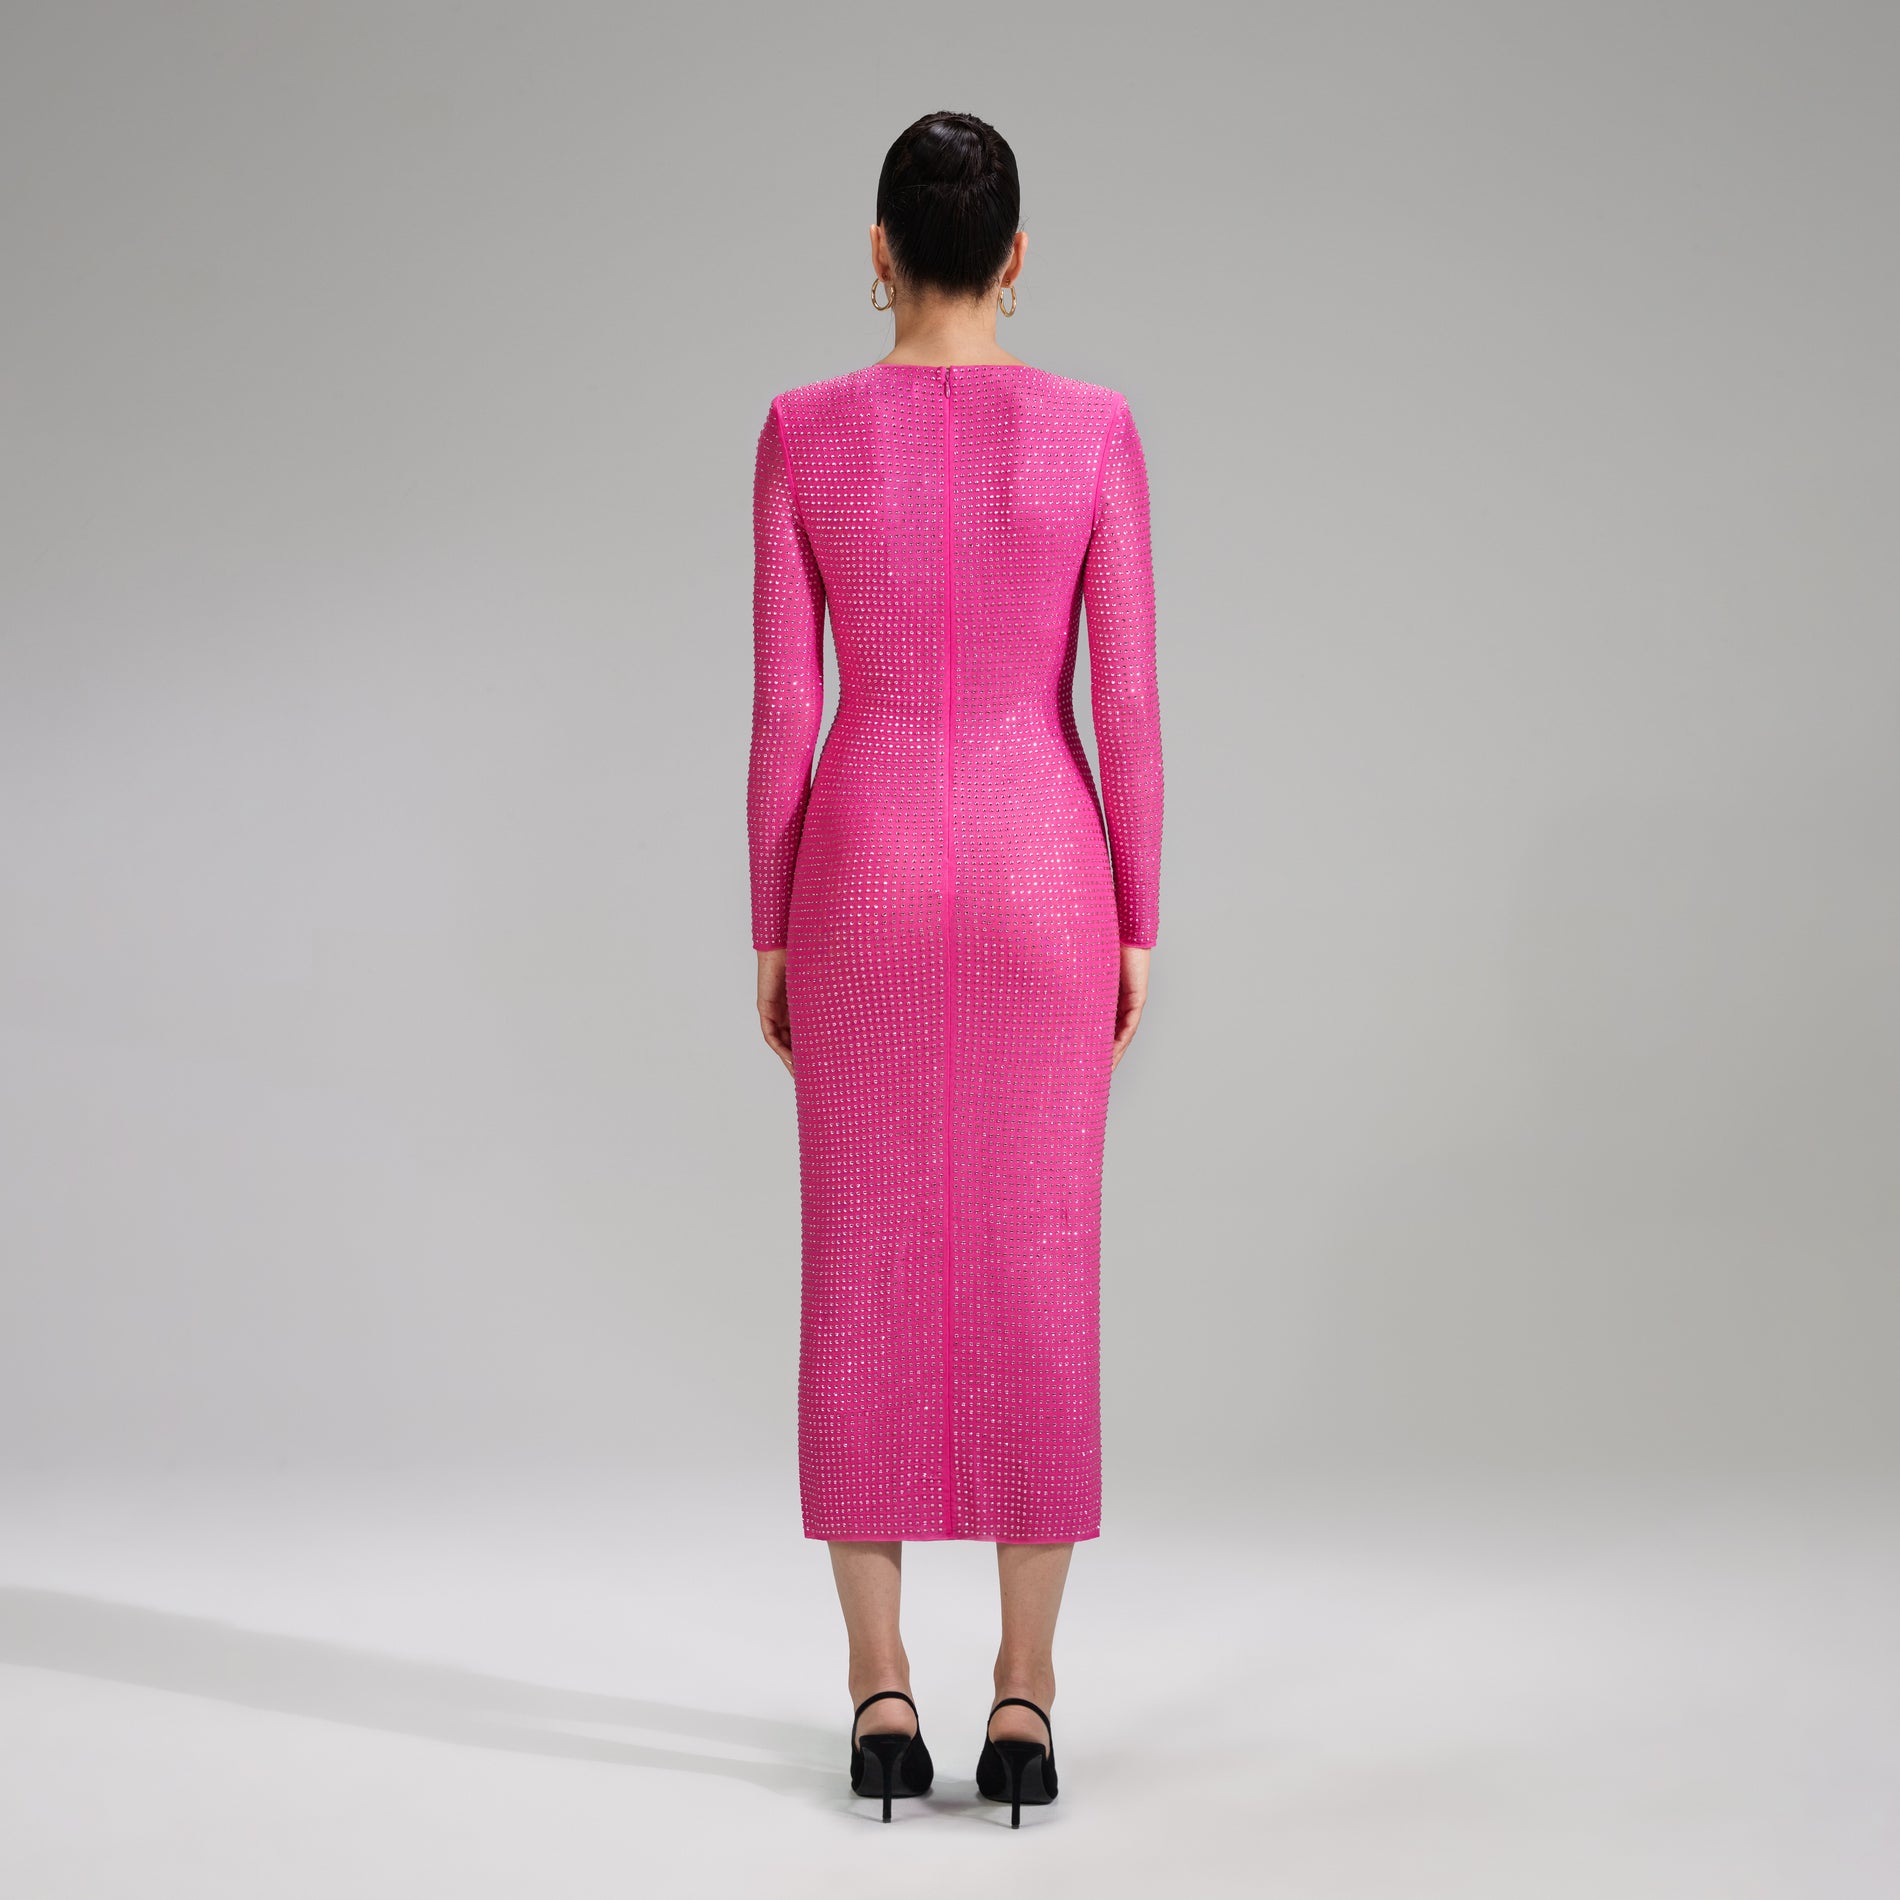 A woman wearing the Pink Rhinestone Mesh Midi Dress